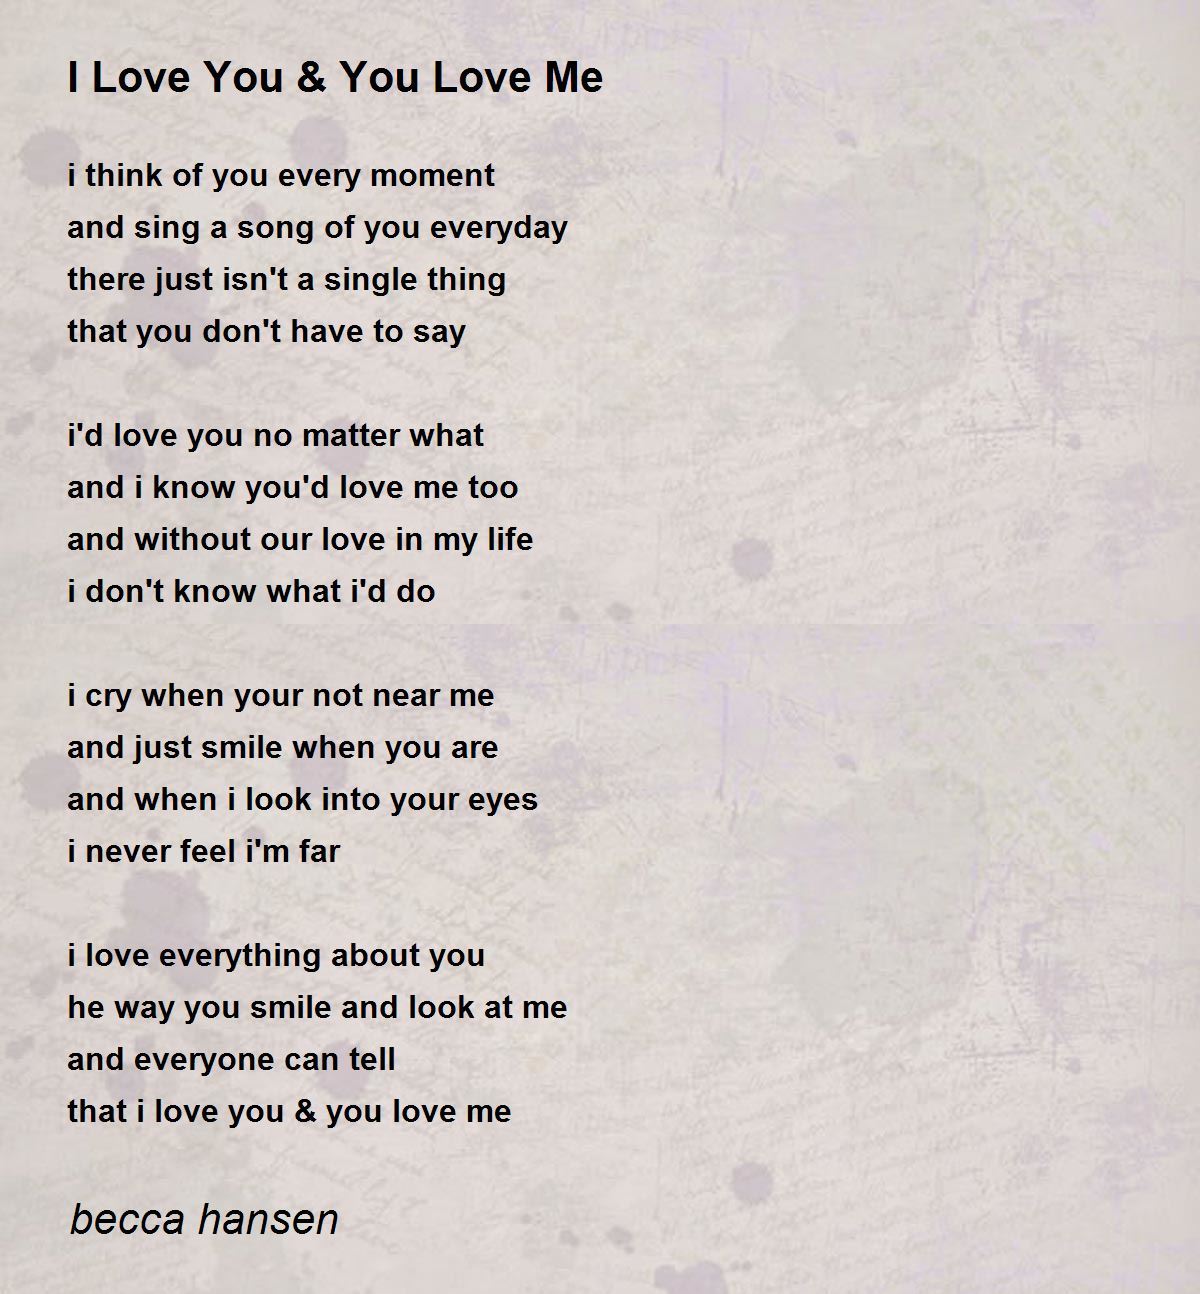 I Love You & You Love Me - I Love You & You Love Me Poem by becca hansen